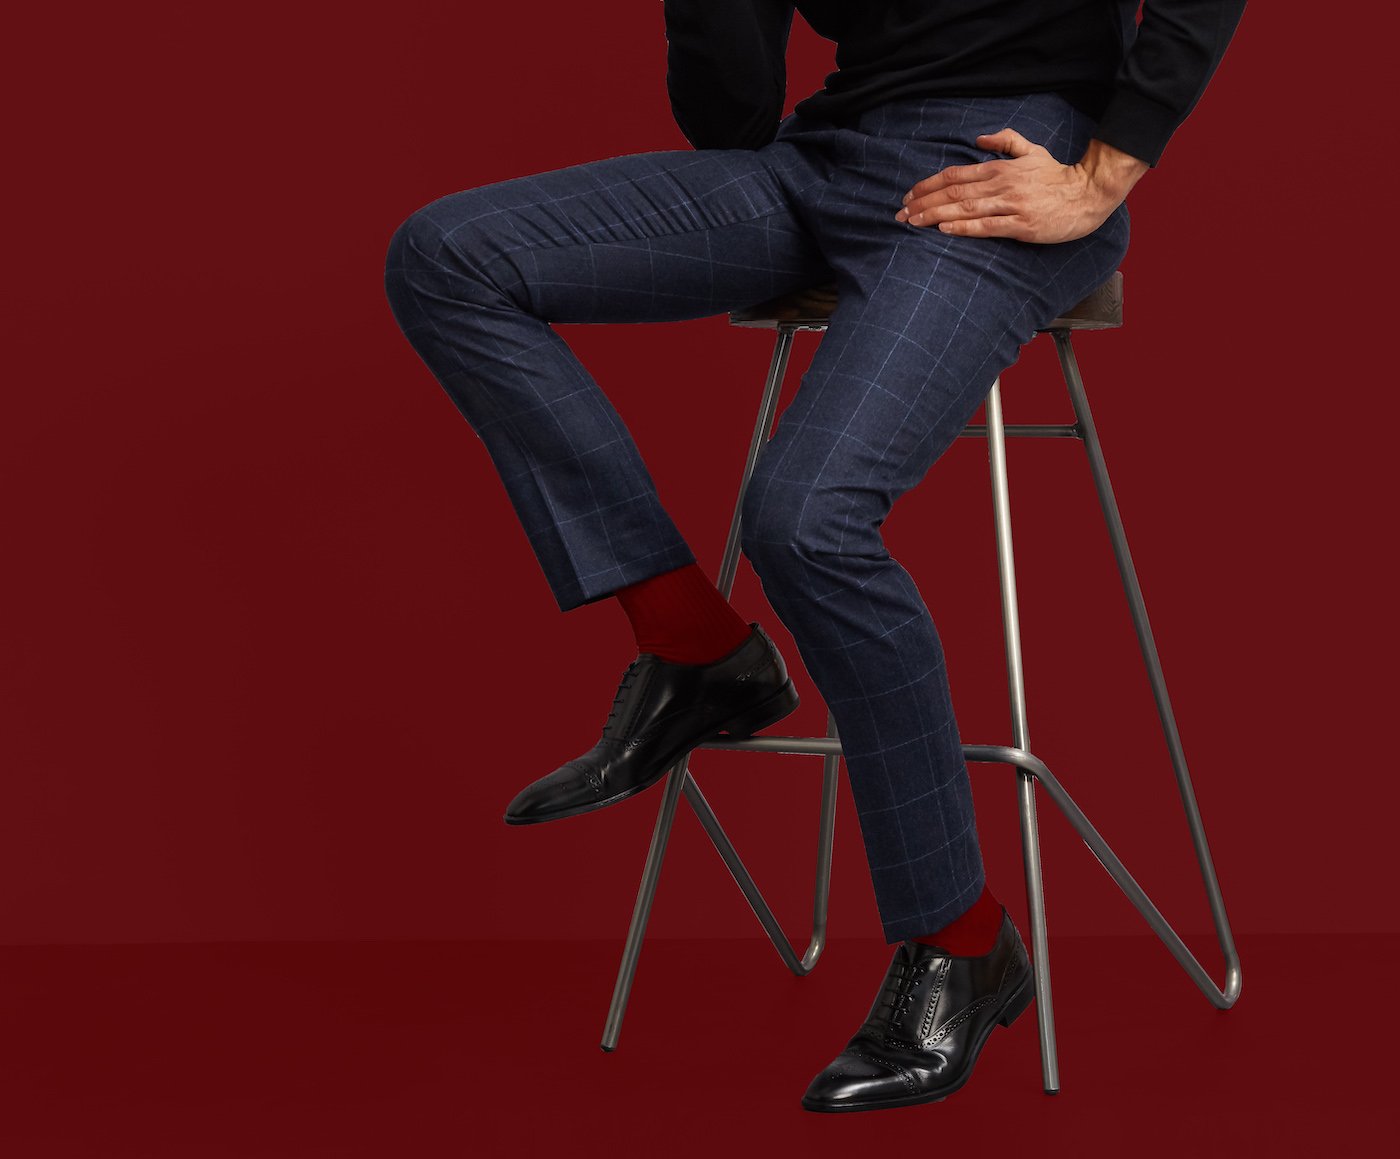 Man on stool in ruby red socks by London Sock Company